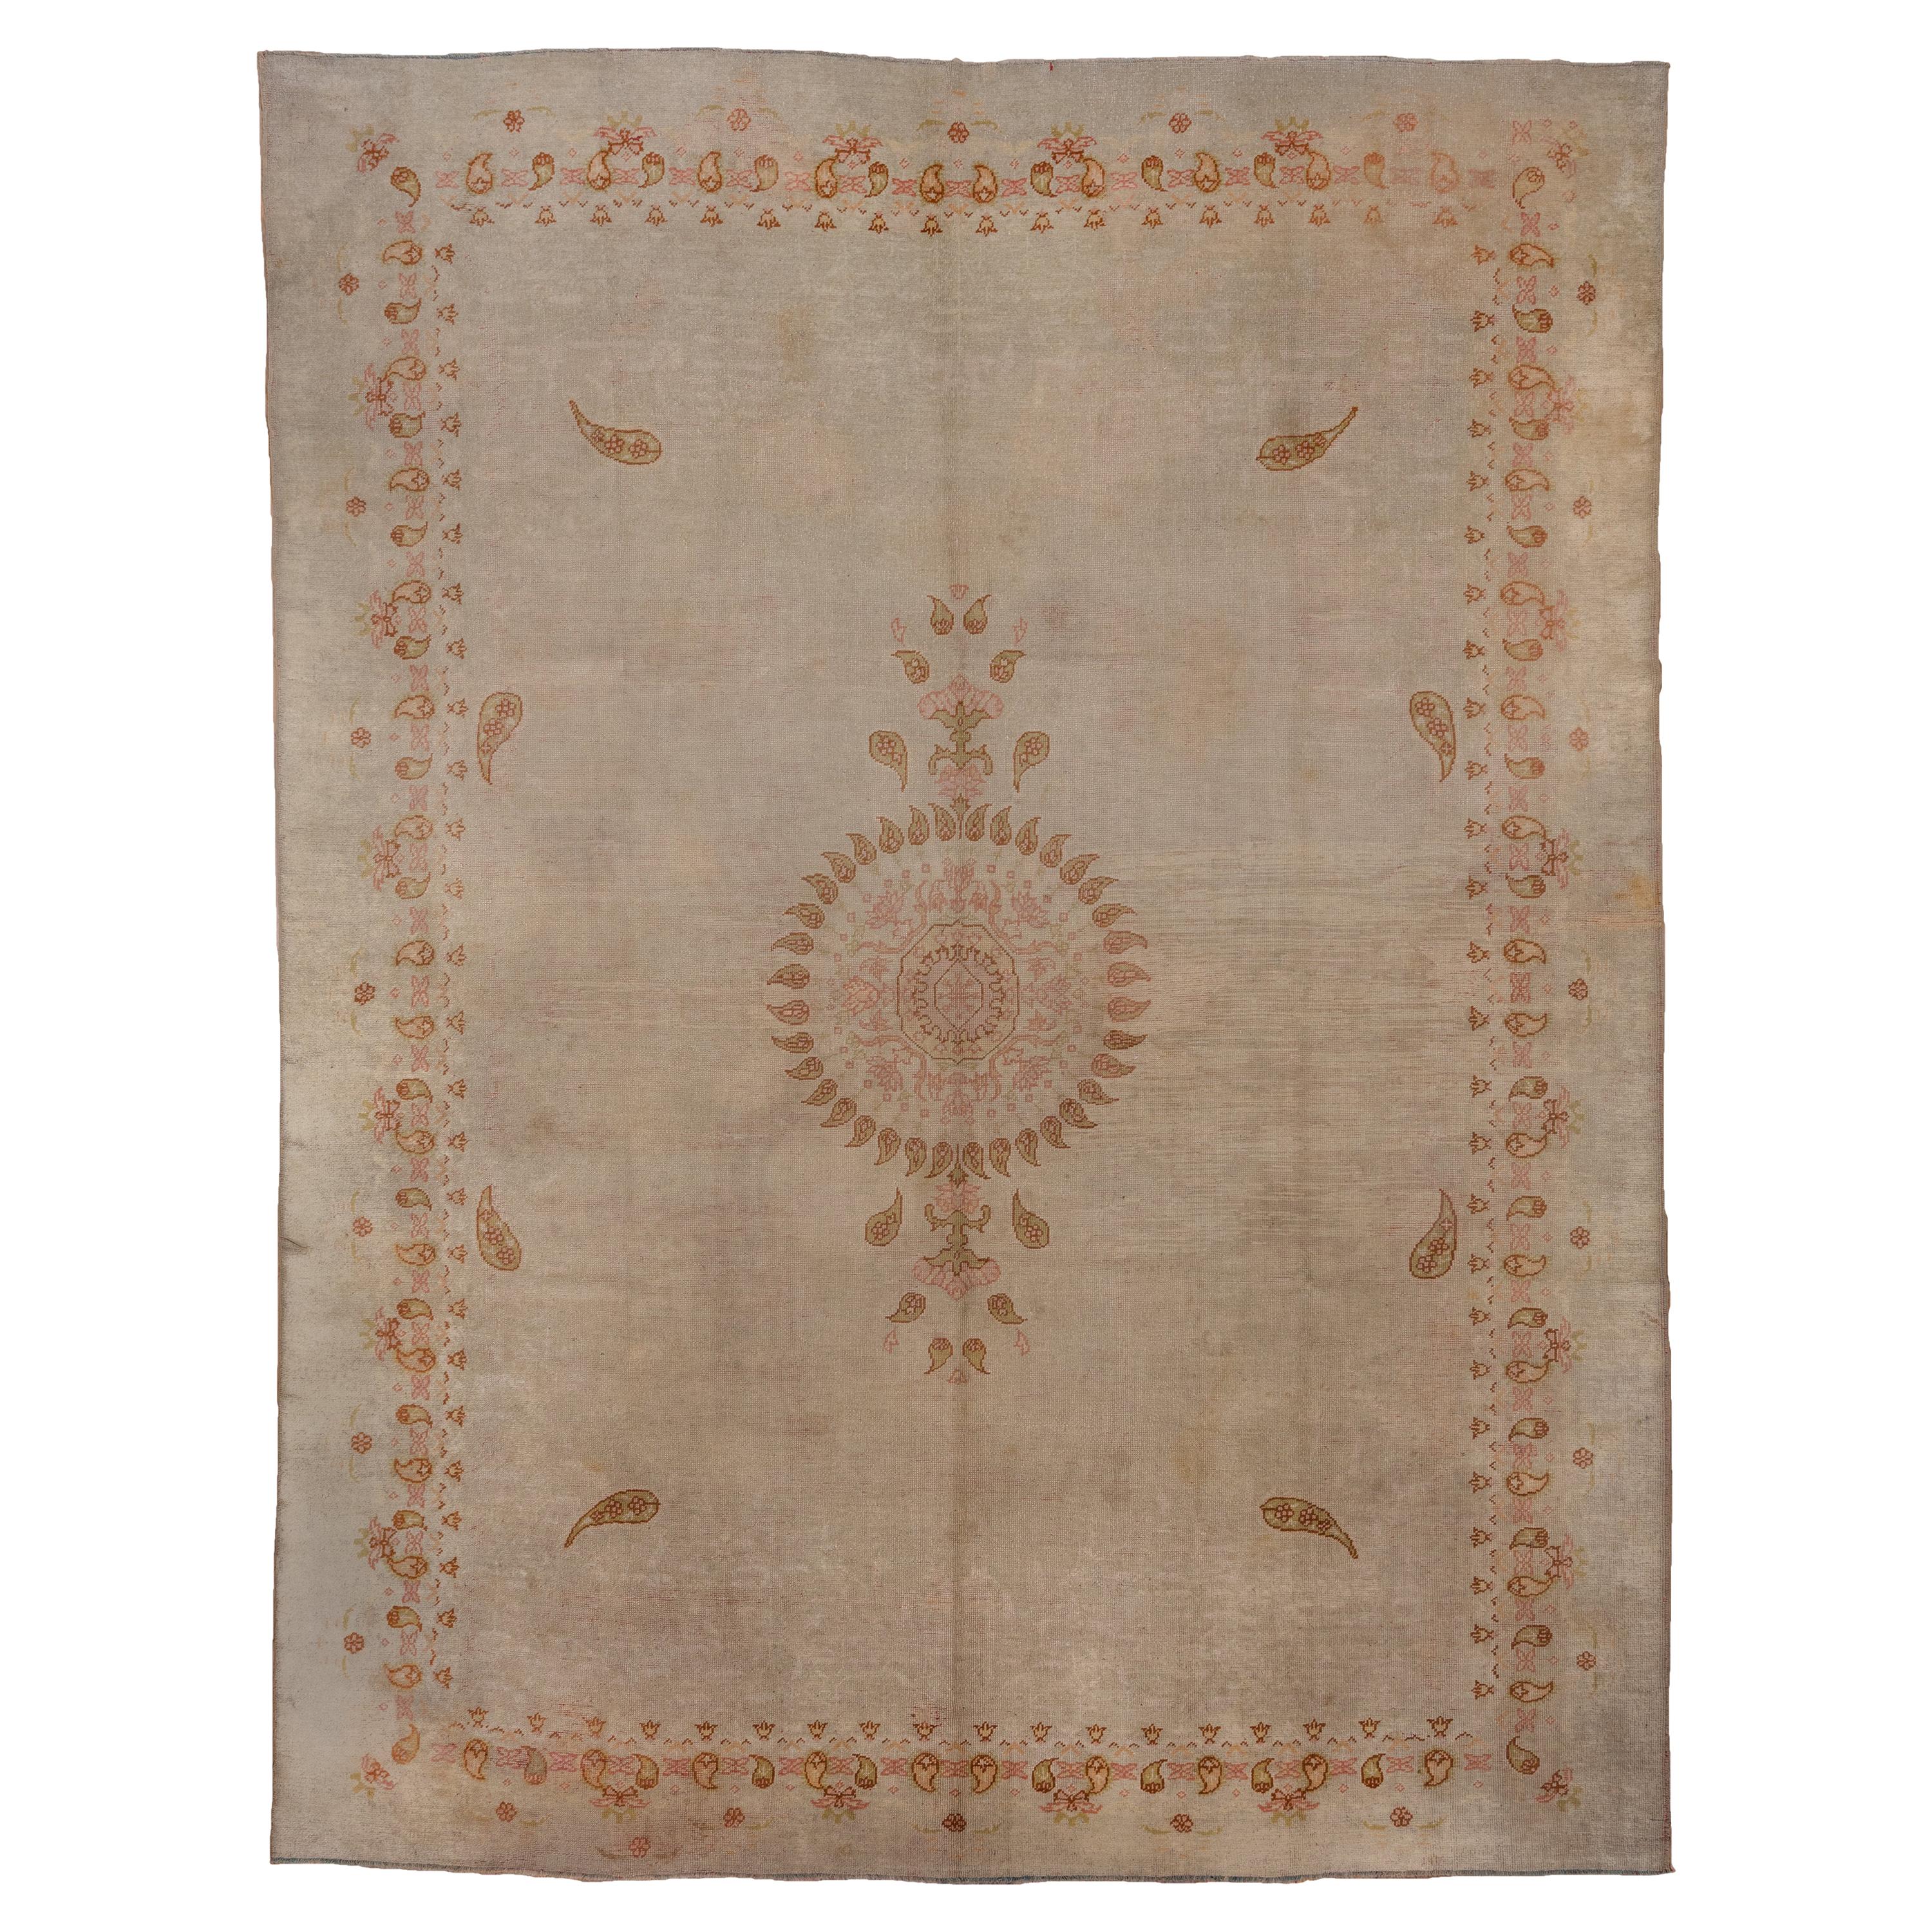 Antique Oushak Carpet, Ivory Field, Orange Accents, circa 1920s